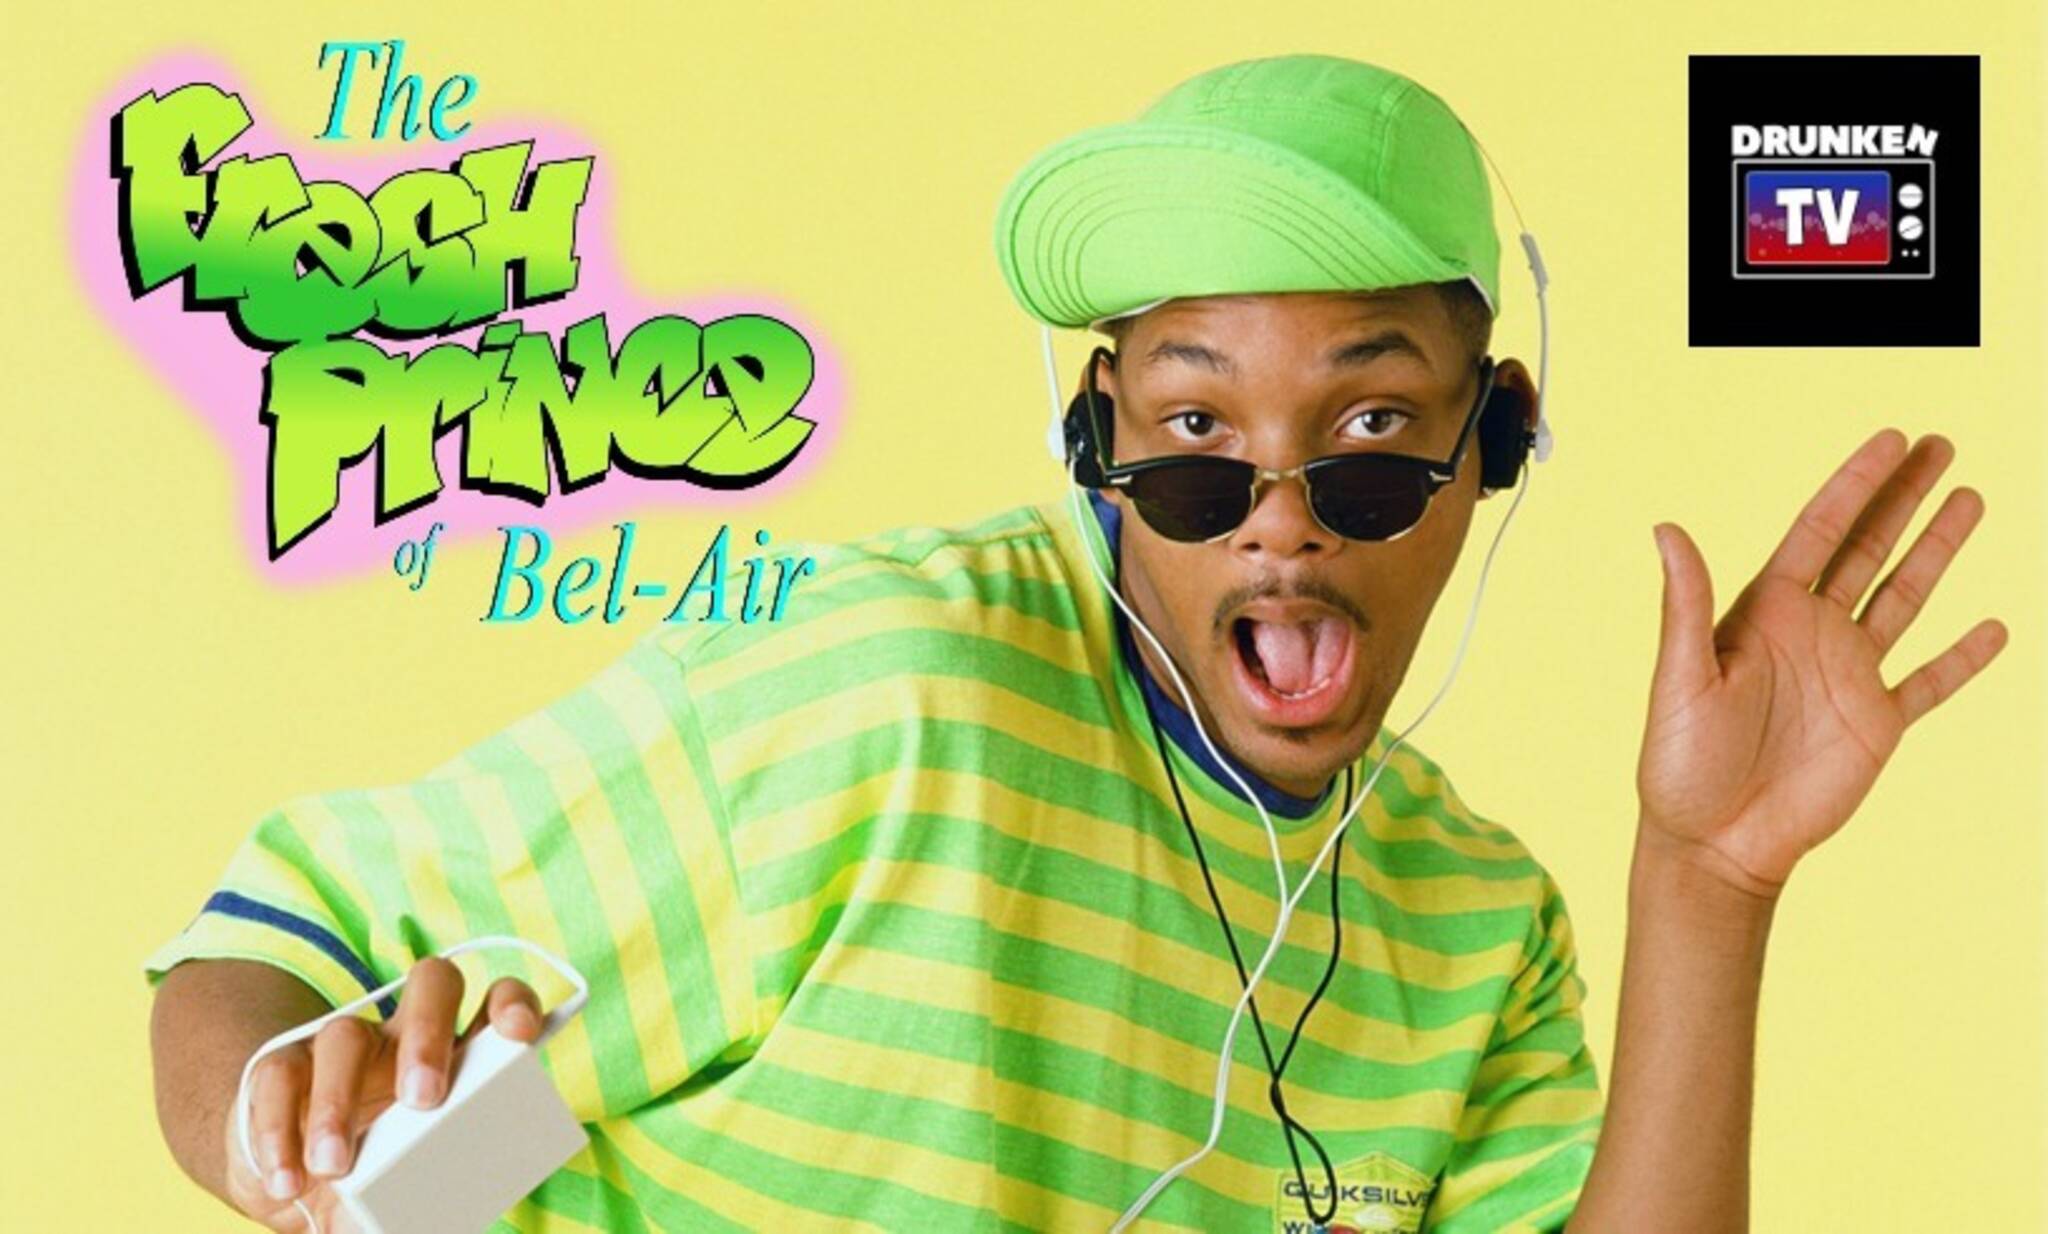 Drunken TV: The Fresh Prince Of Bel-Air